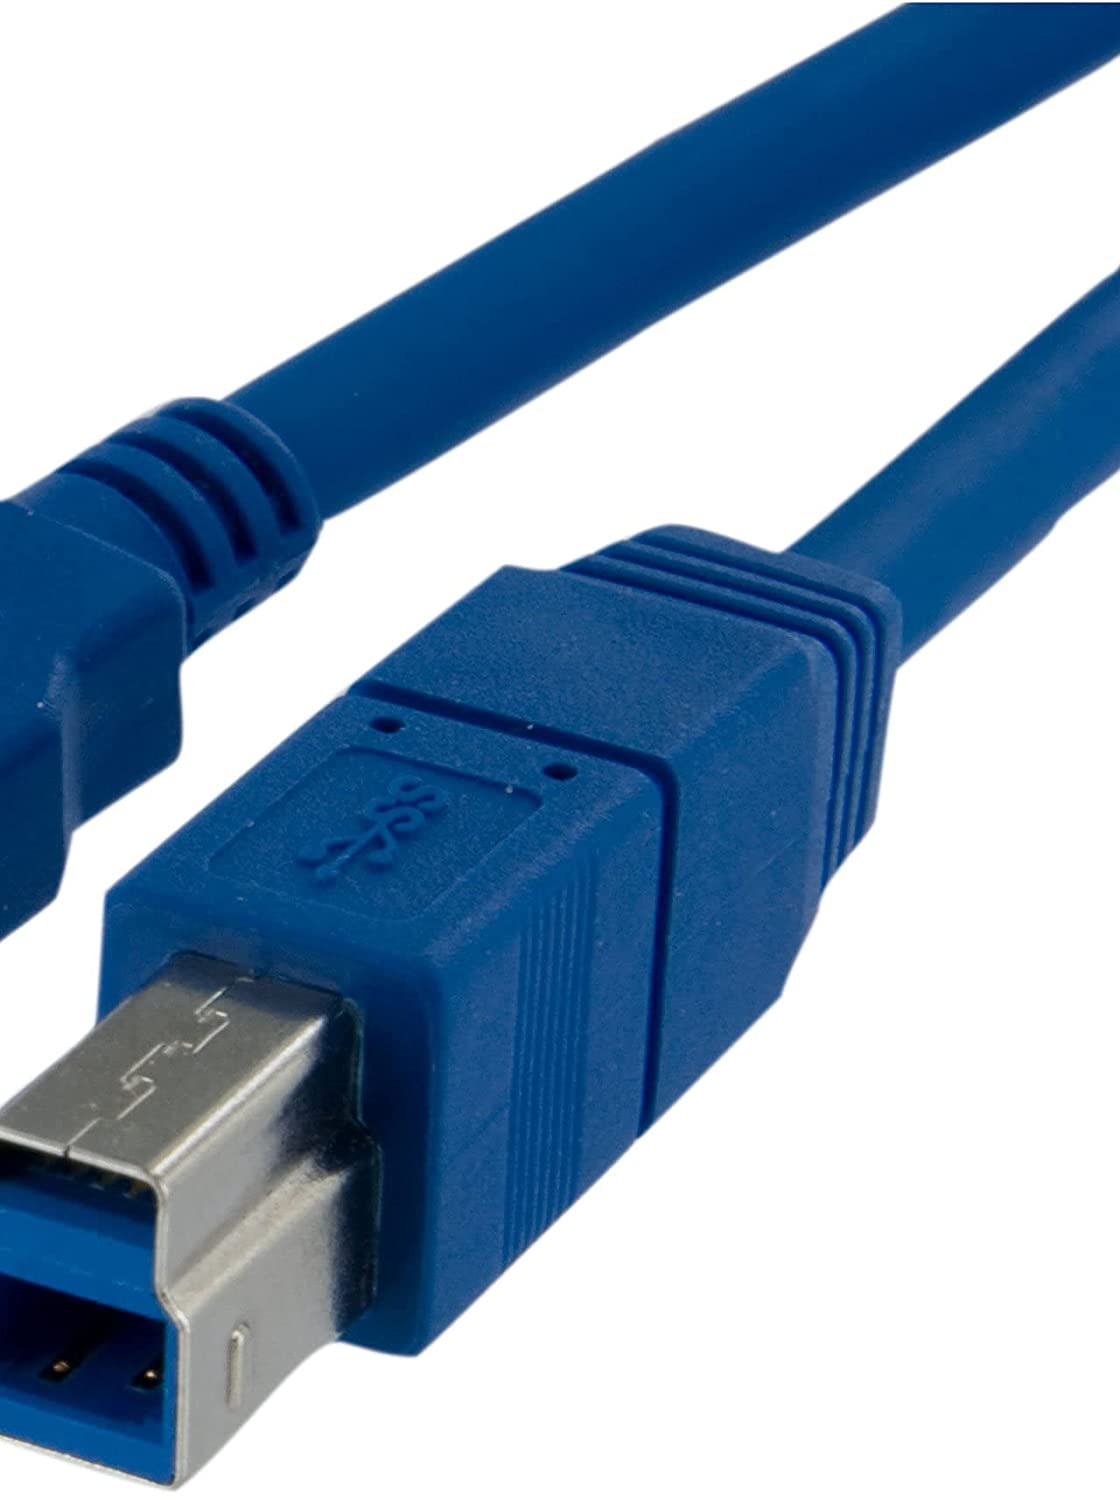 StarTech.com 1 ft / 30cm SuperSpeed USB 3.0 Cable A to B - USB 3 A (m) to USB 3 B (m) (USB3SAB1),Blue 1 ft / 30cm Blue